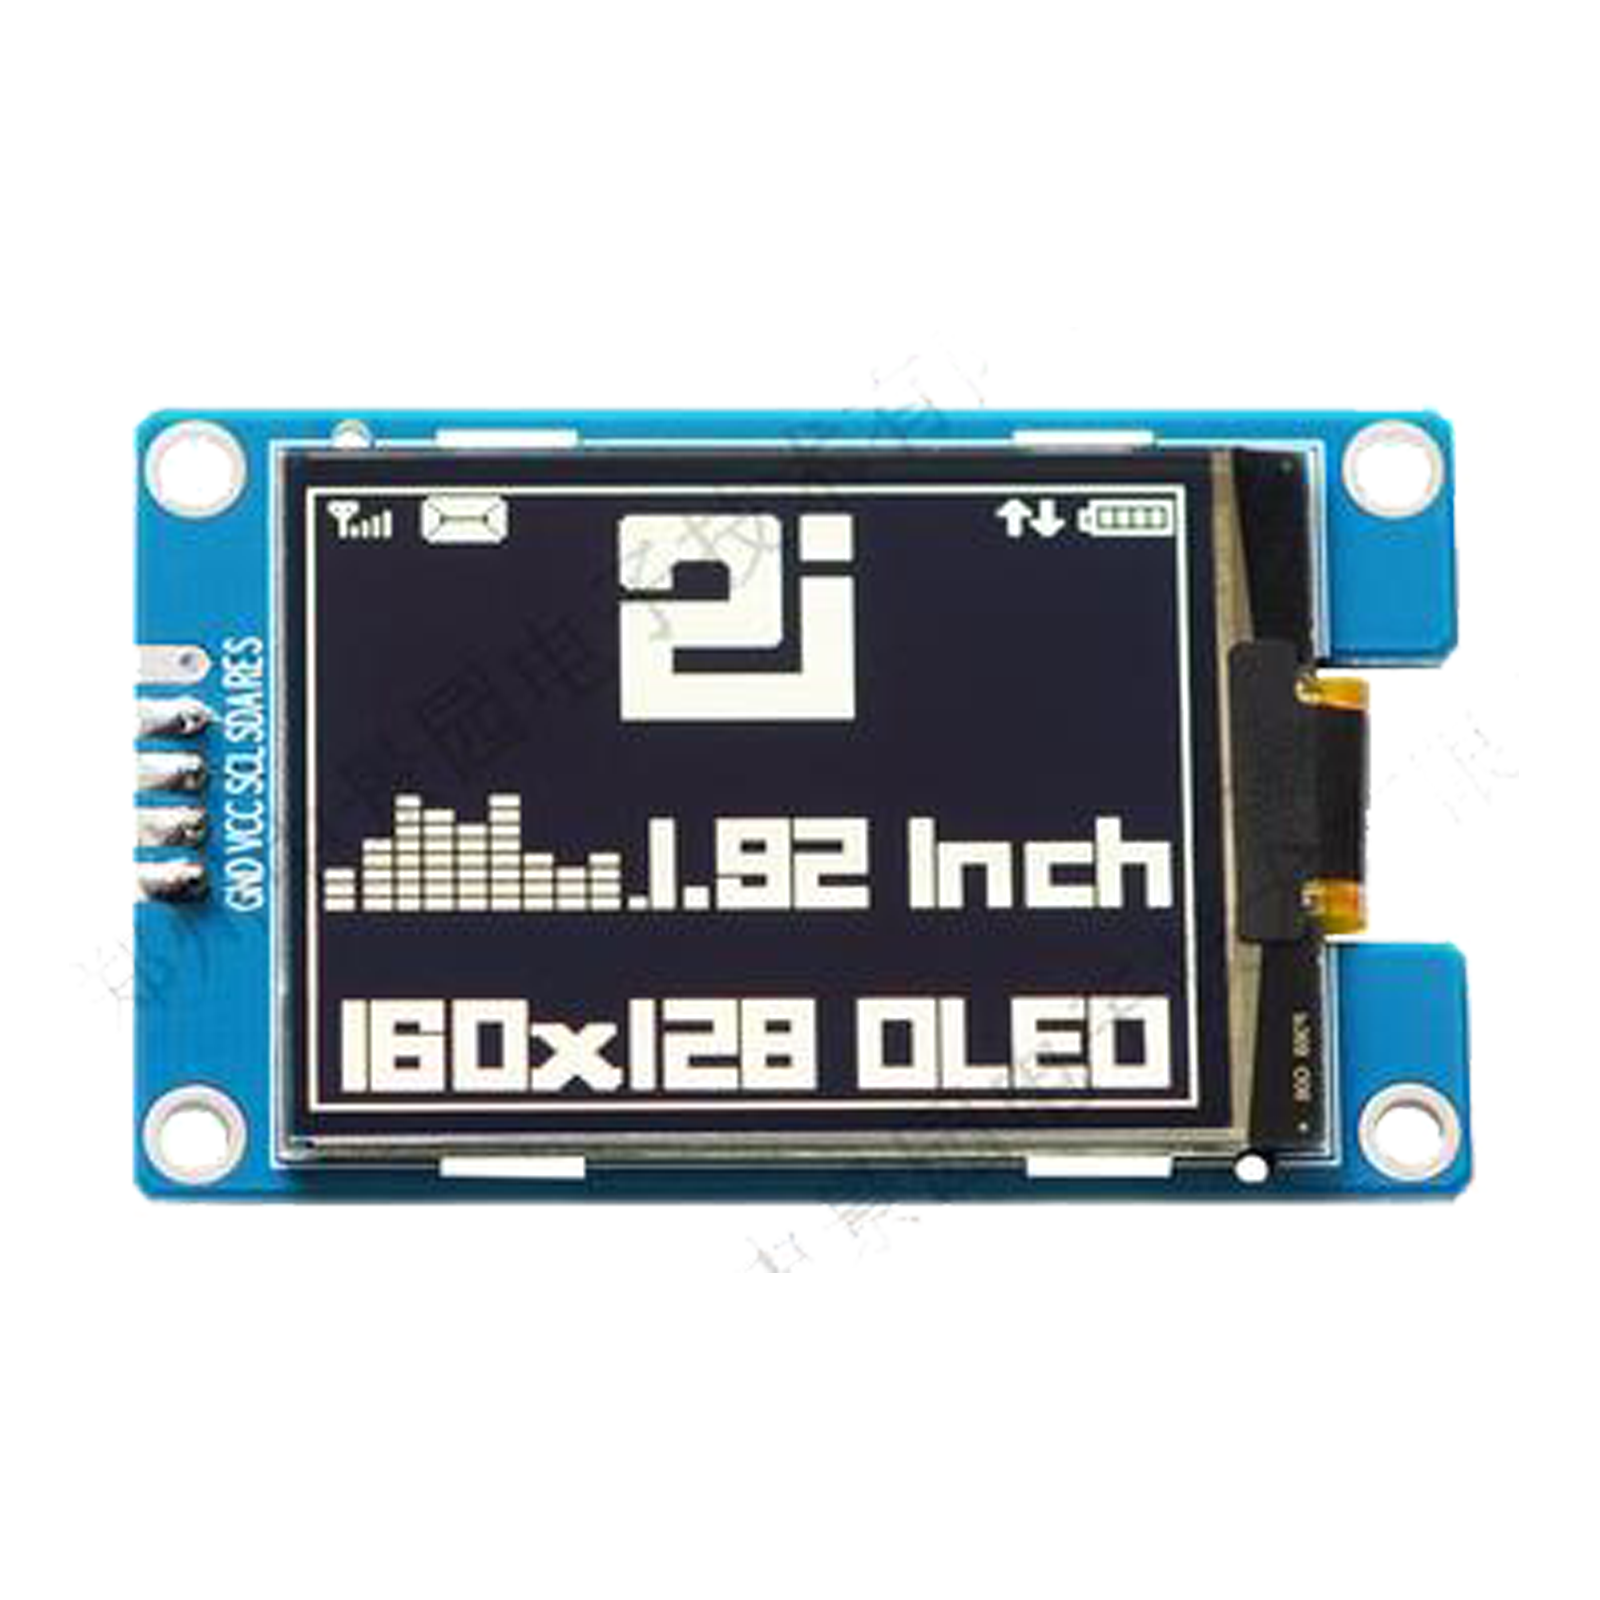 Display Module 1.92“ 128 x 160 Monochrome Graphic OLED - SPI,I2C